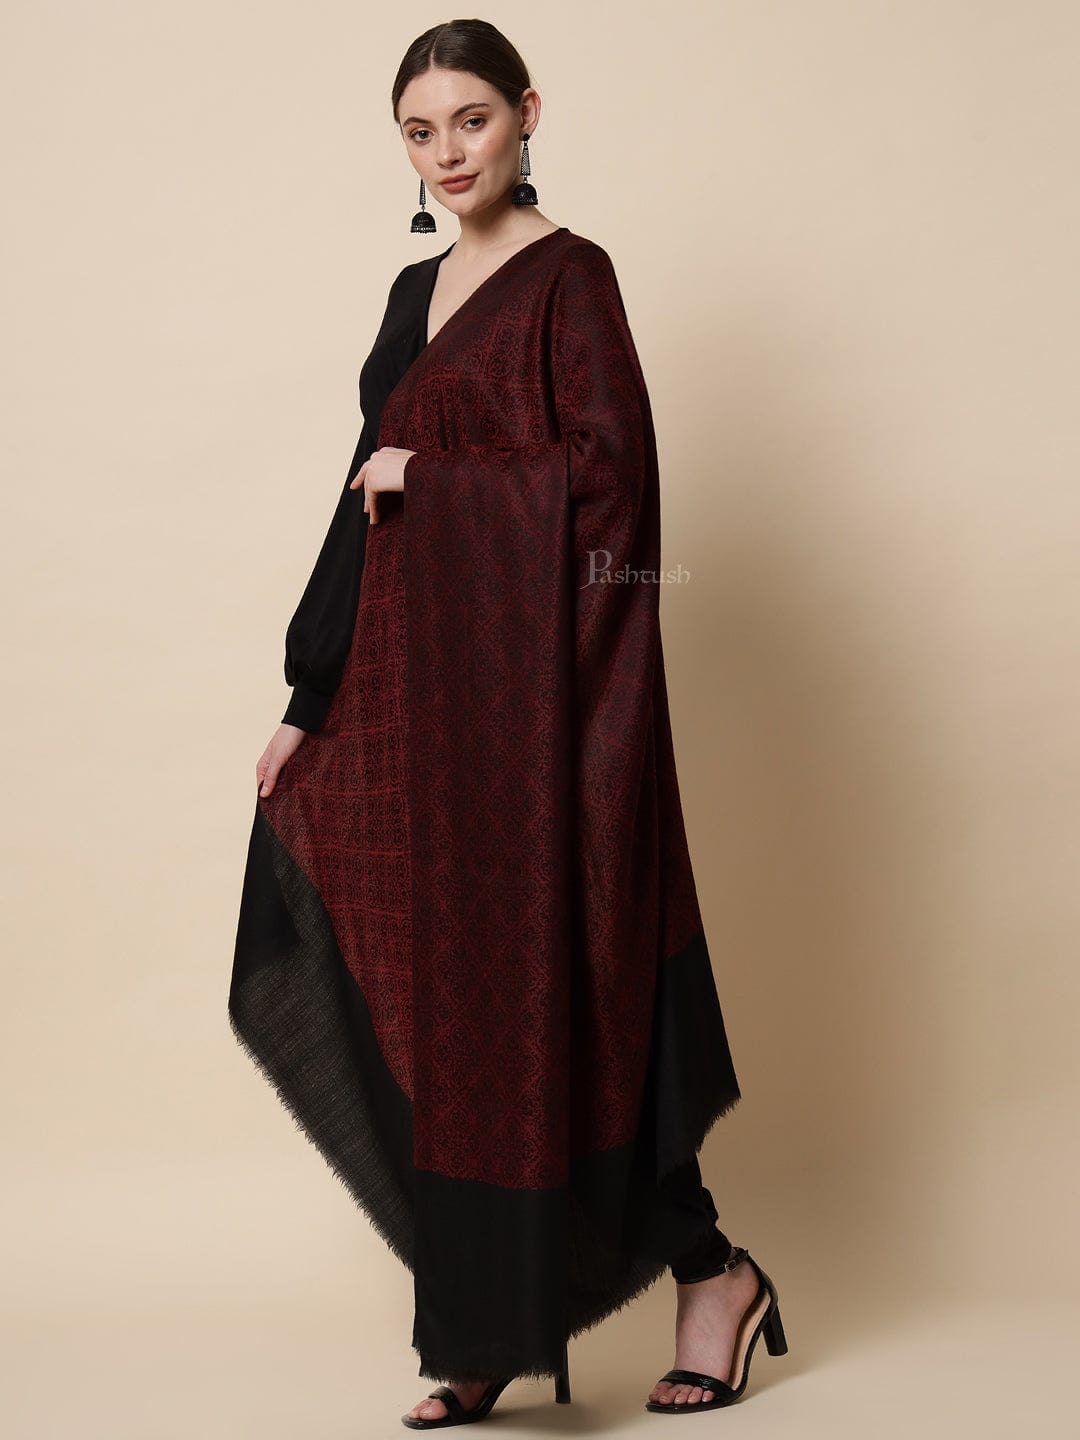 Pashtush India Womens Shawls Pashtush Womens Woven Paisley, Self Shawl, In Extra Soft Fine Wool, Large Wrap Size, Black